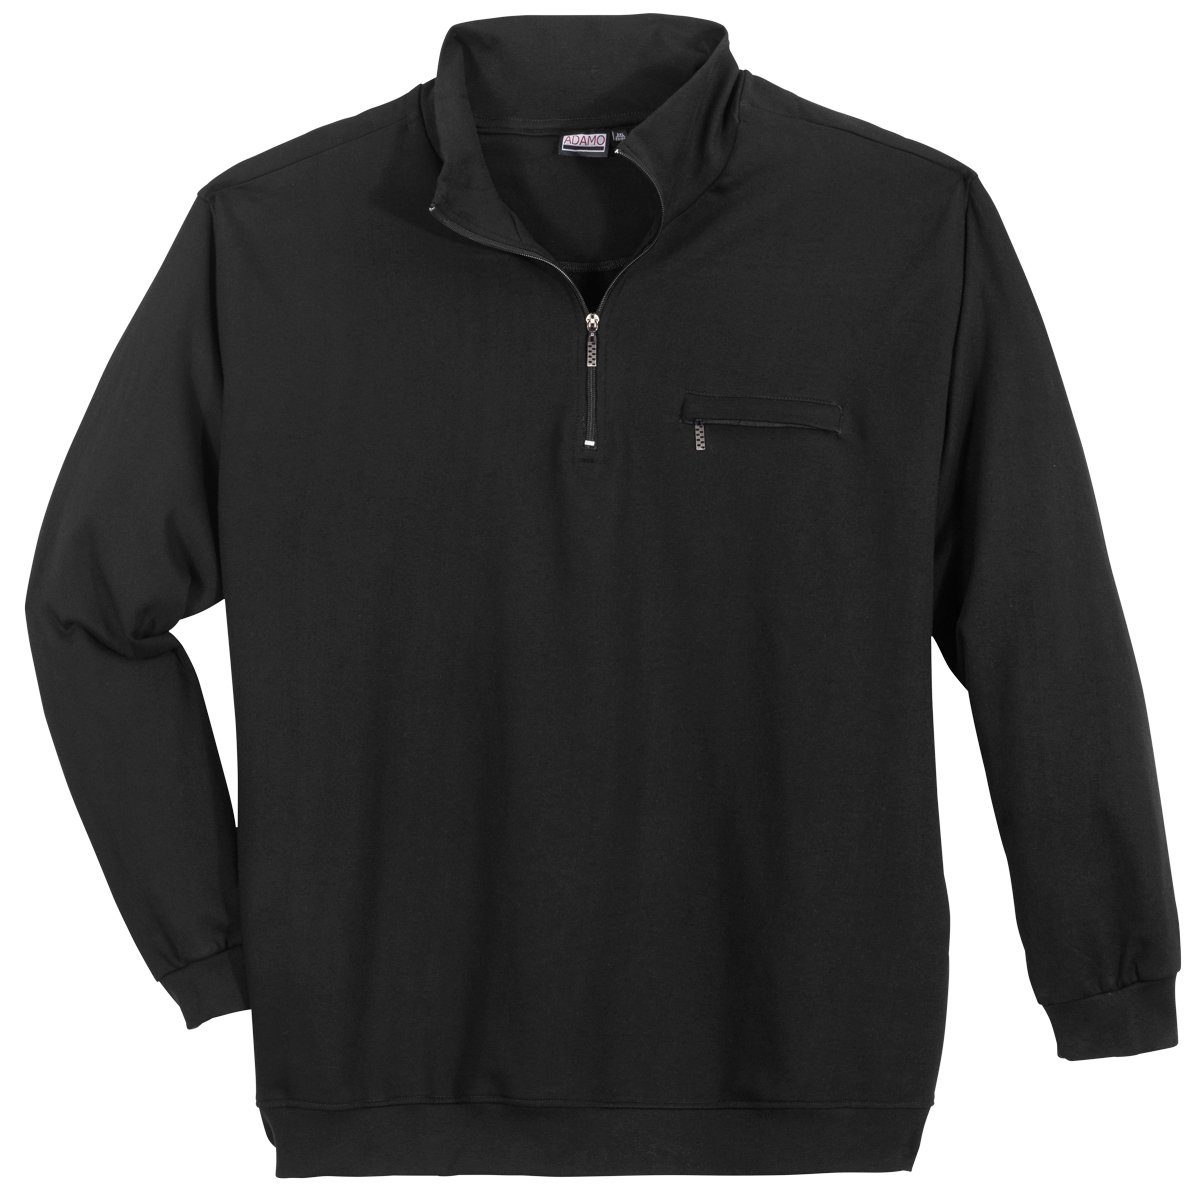 Herren Pullover ADAMO Sweater Große Größen Troyer-Sweatshirt schwarz Adamo